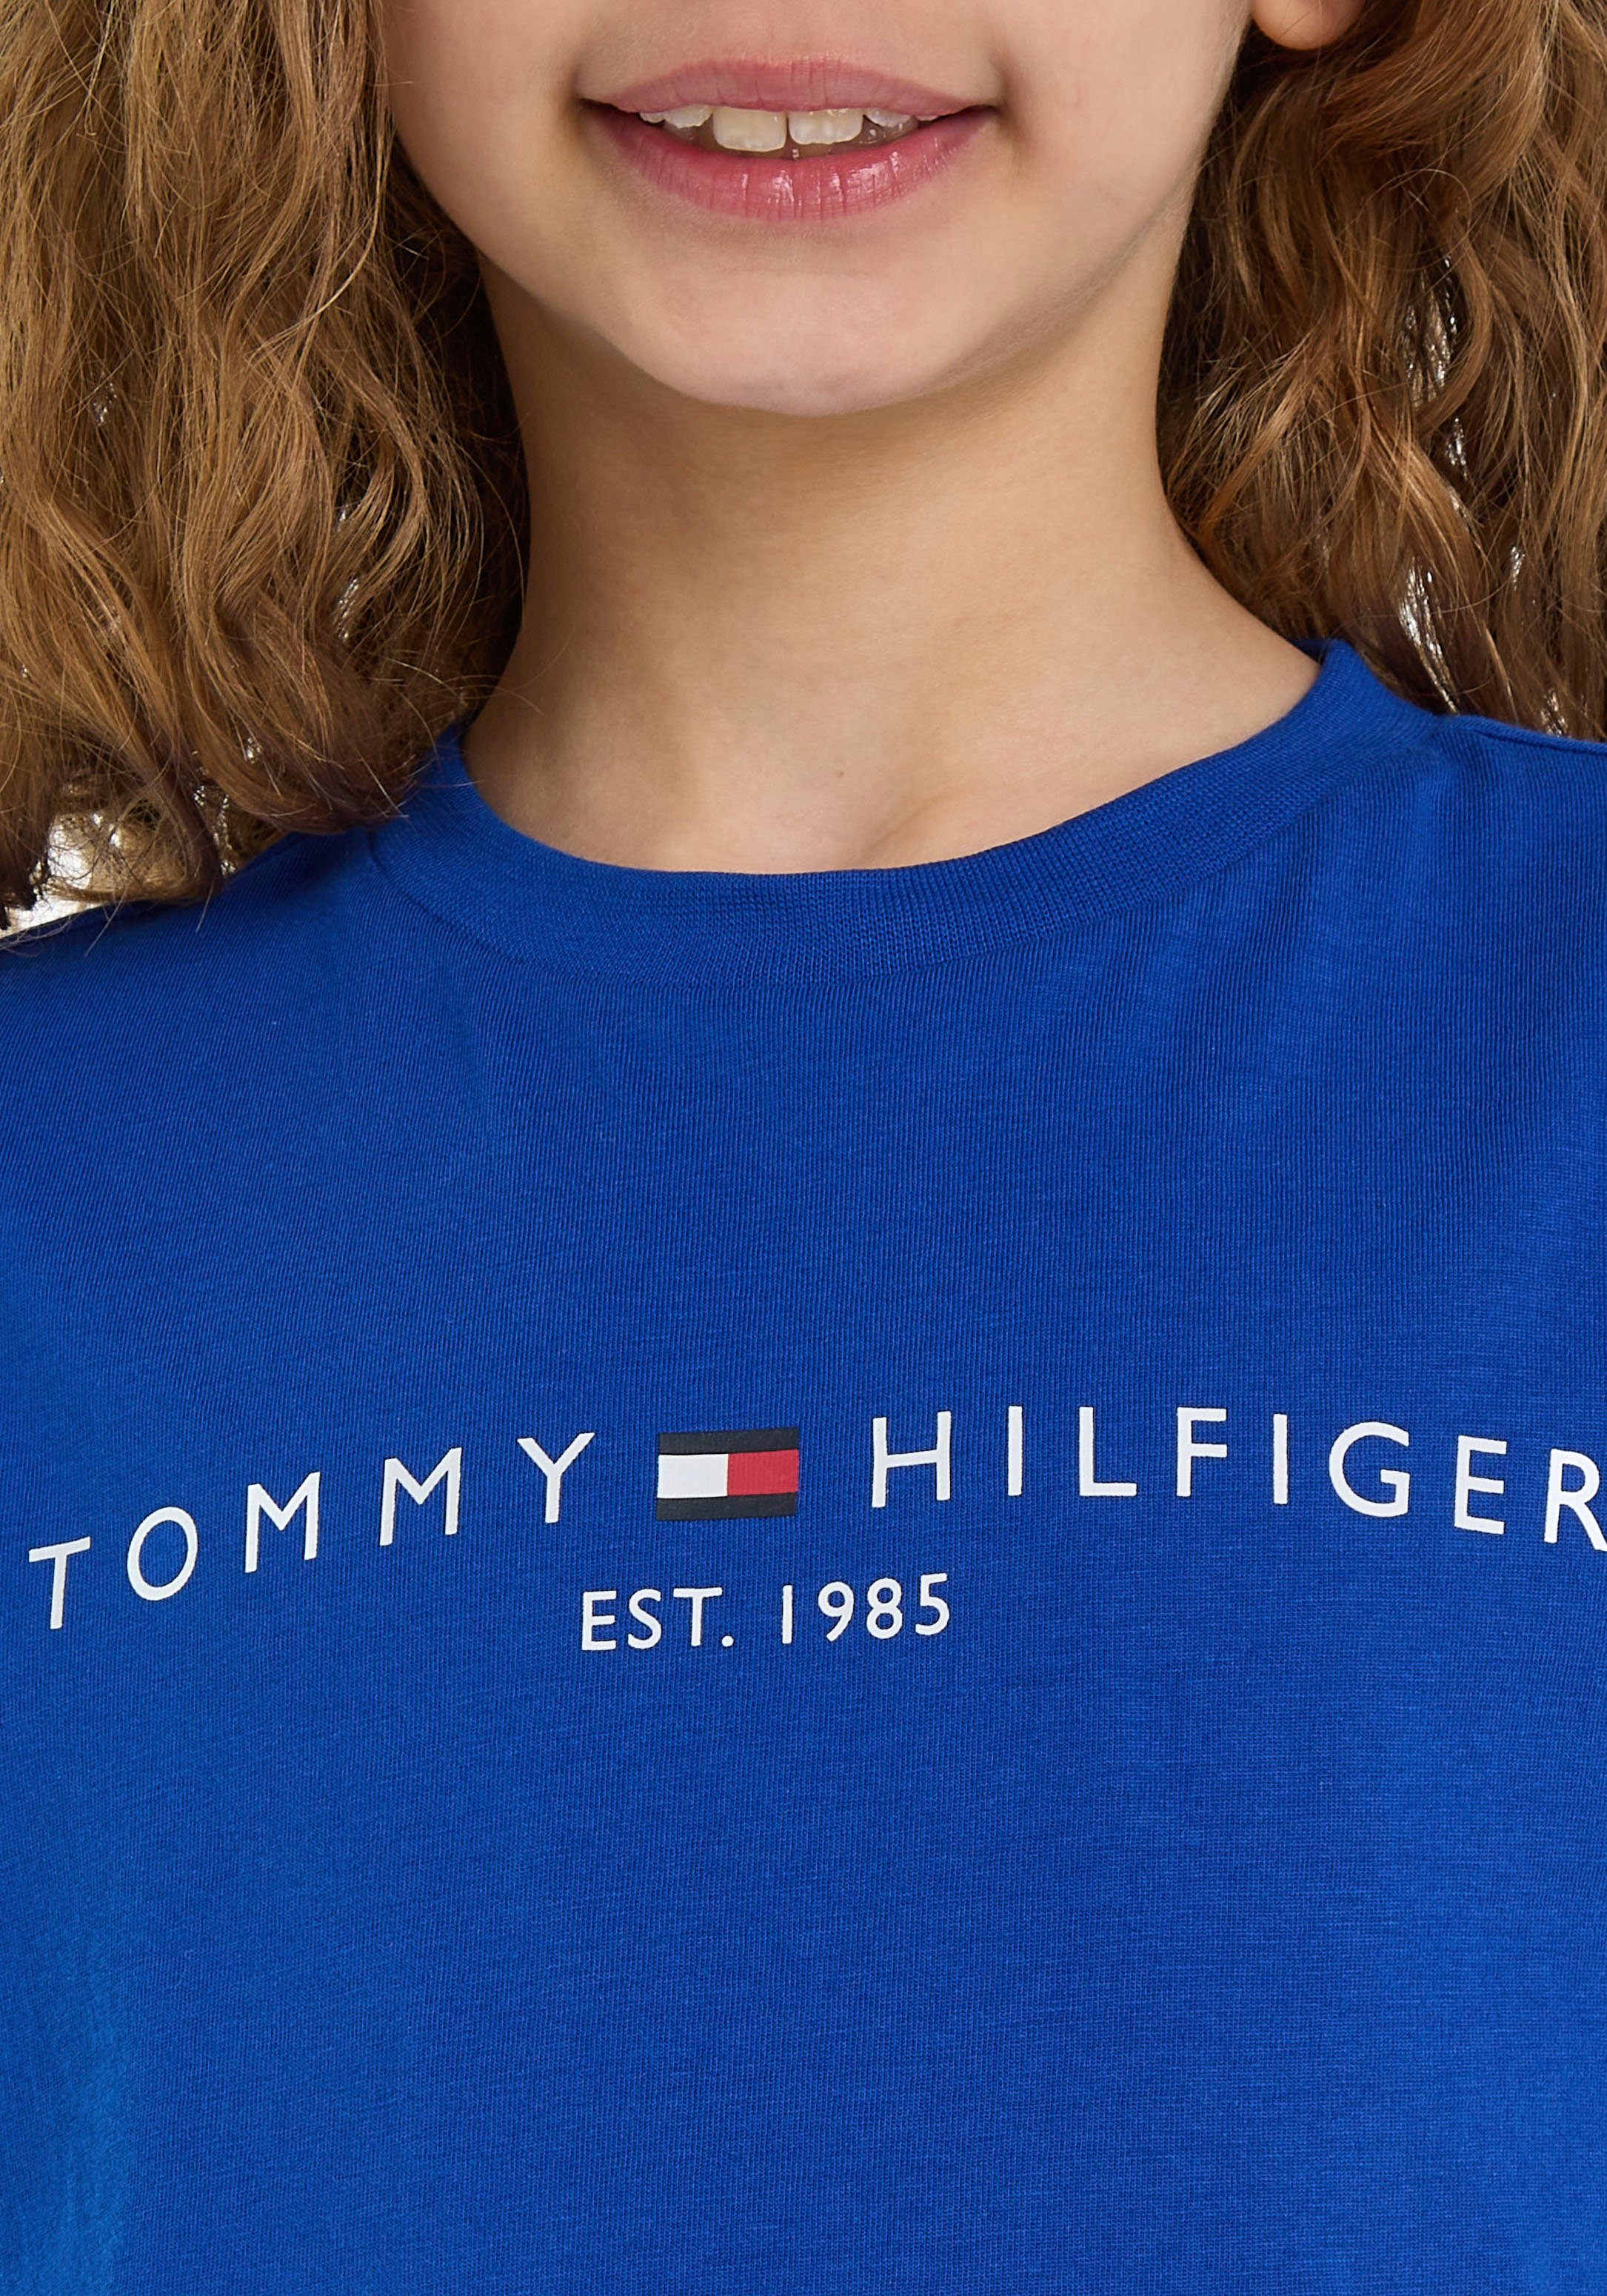 Jahre S/S bis Tommy T-Shirt ultra Kinder TEE Hilfiger U 16 blue ESSENTIAL